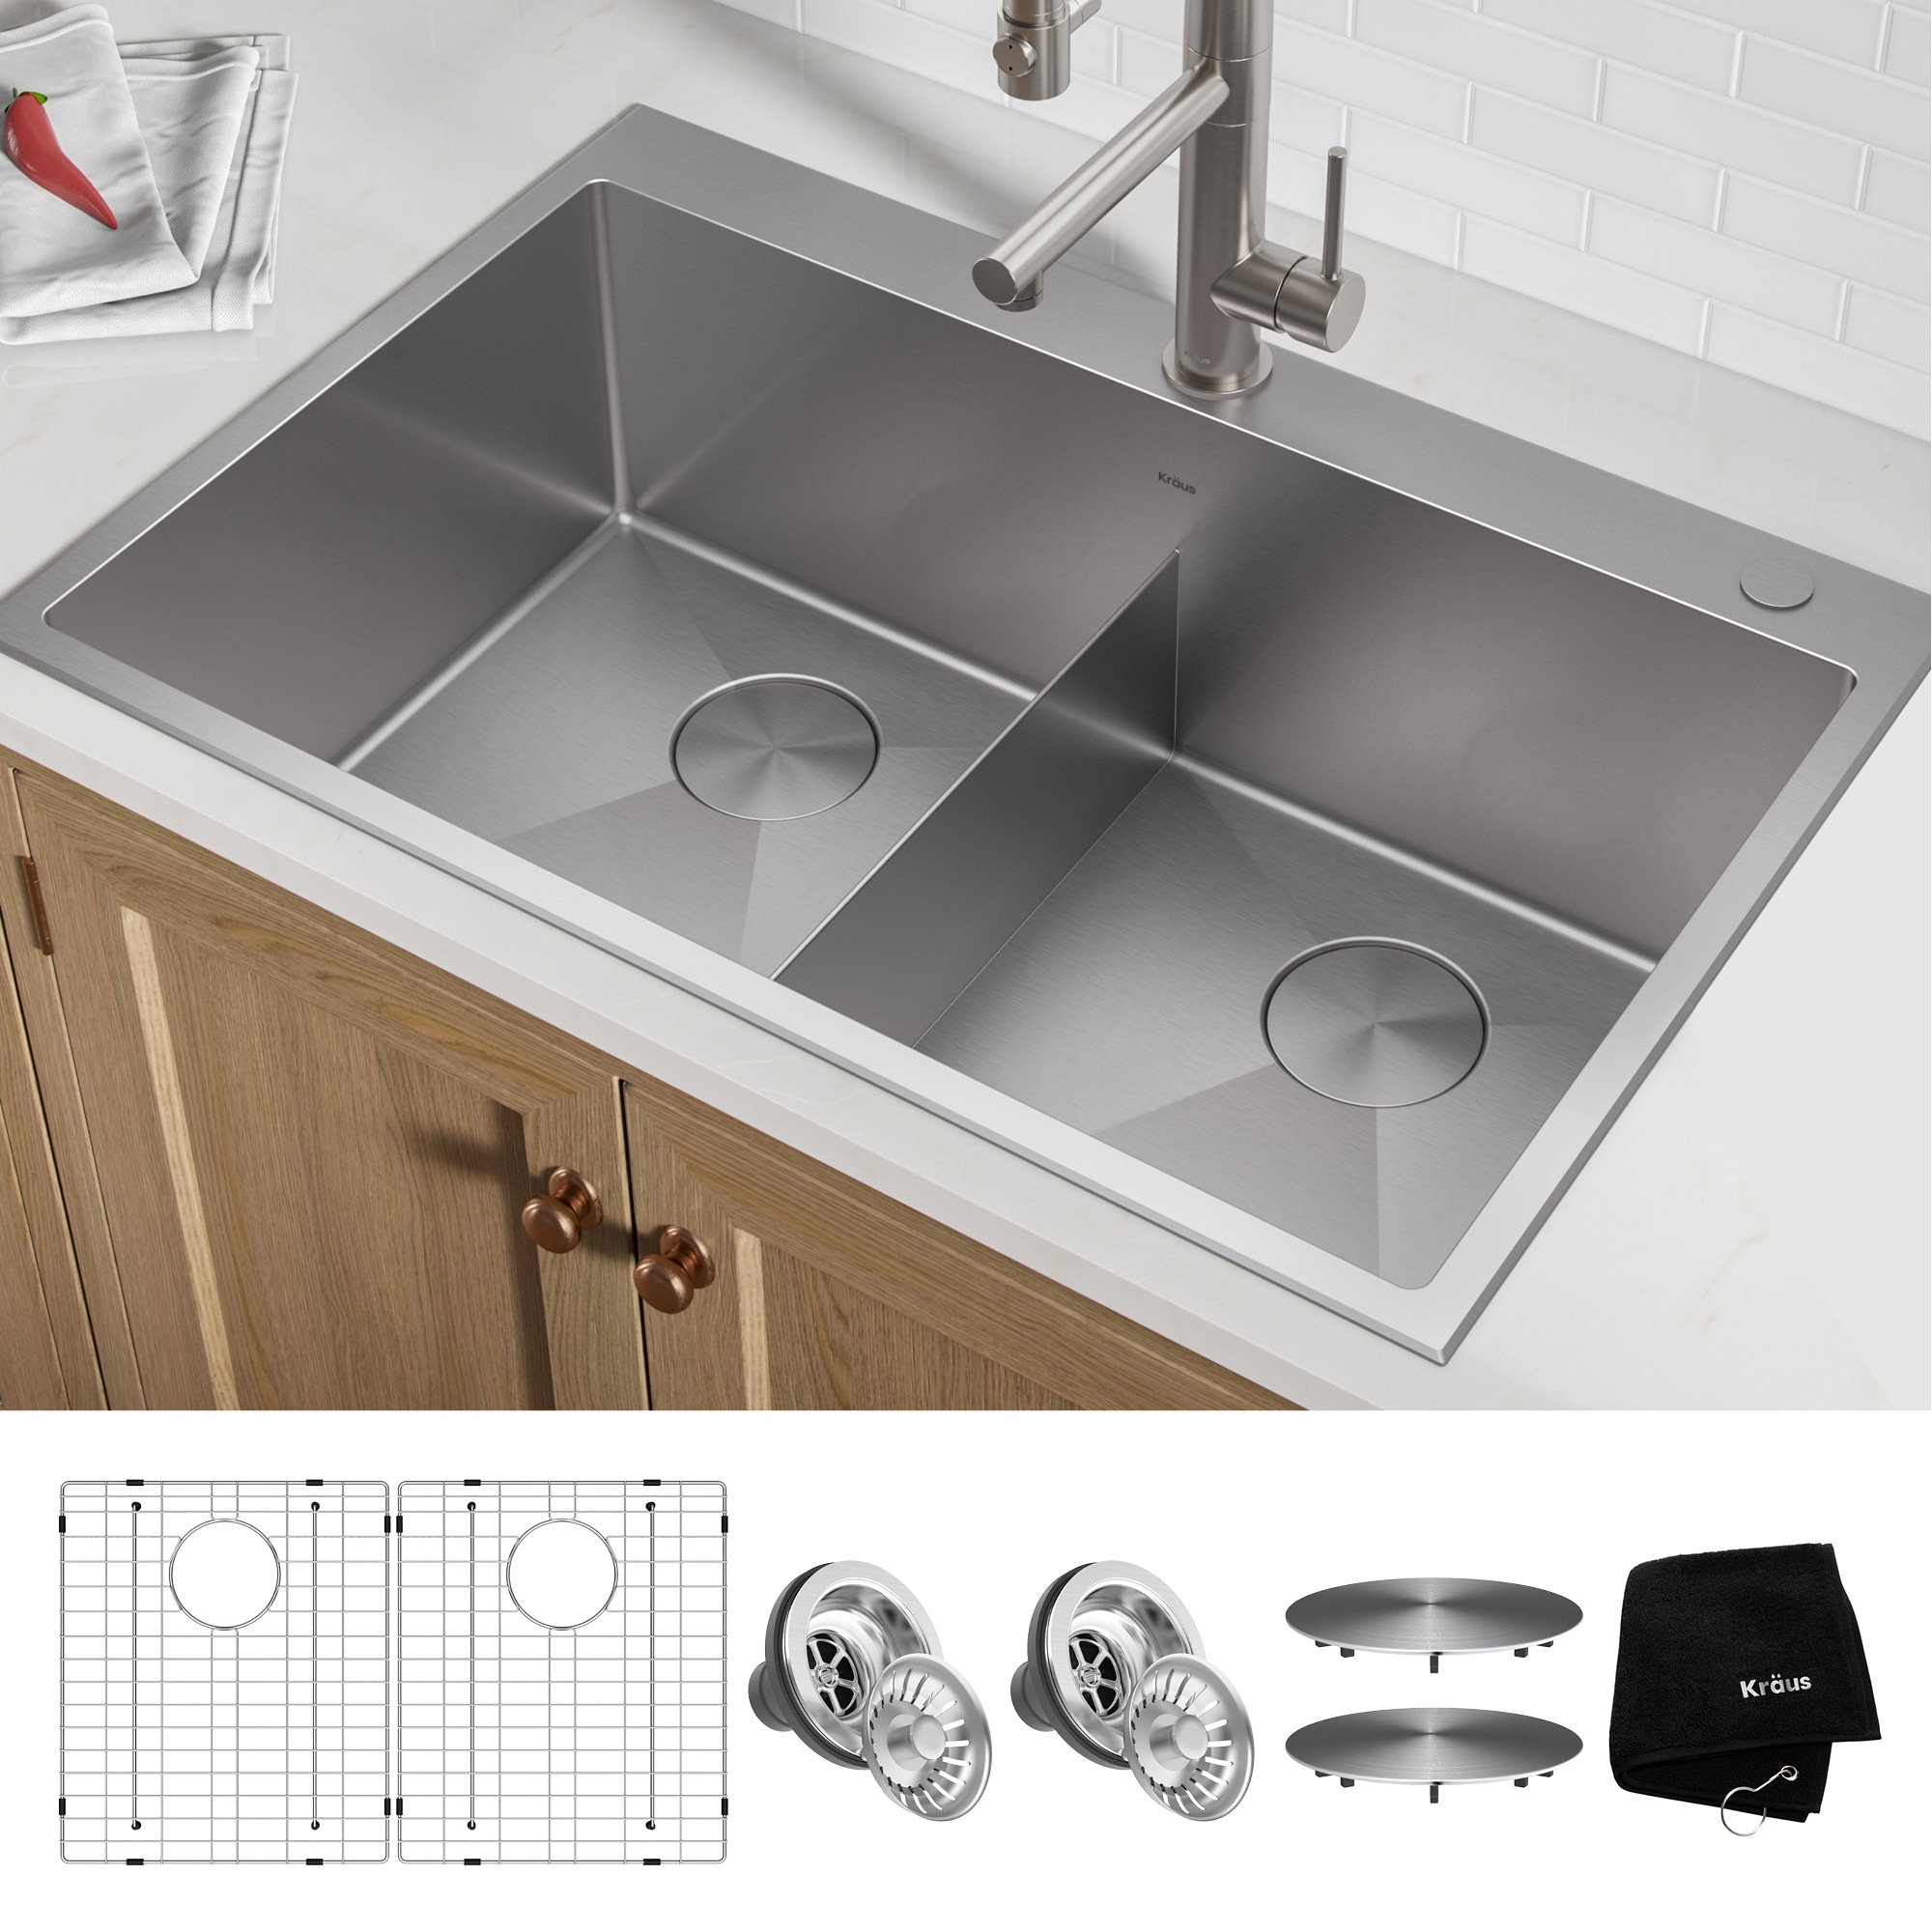 33" x 22" x 9" Stainless Steel Top Mount Kitchen Sink Dual Basin w/ Strainer 